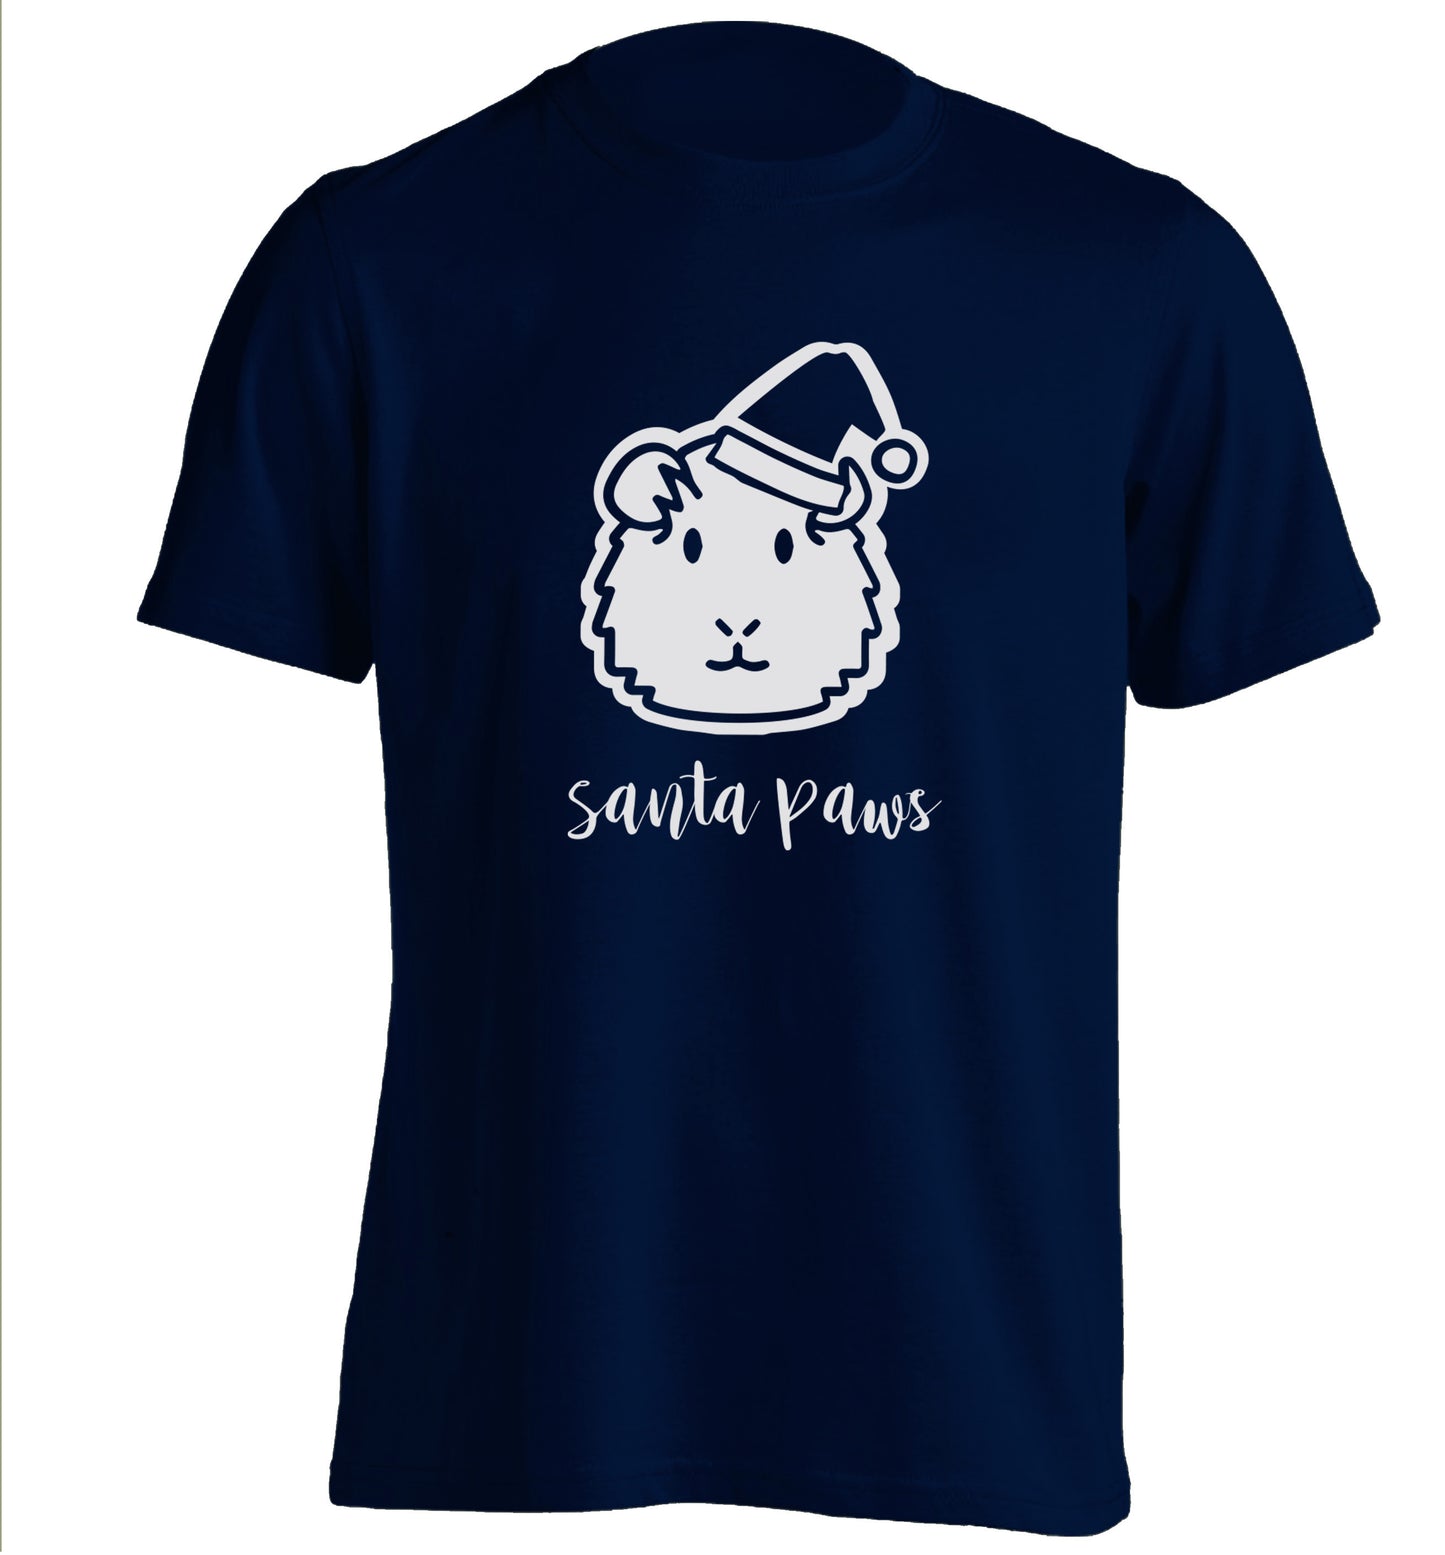 Guinea pig Santa Paws adults unisex navy Tshirt 2XL